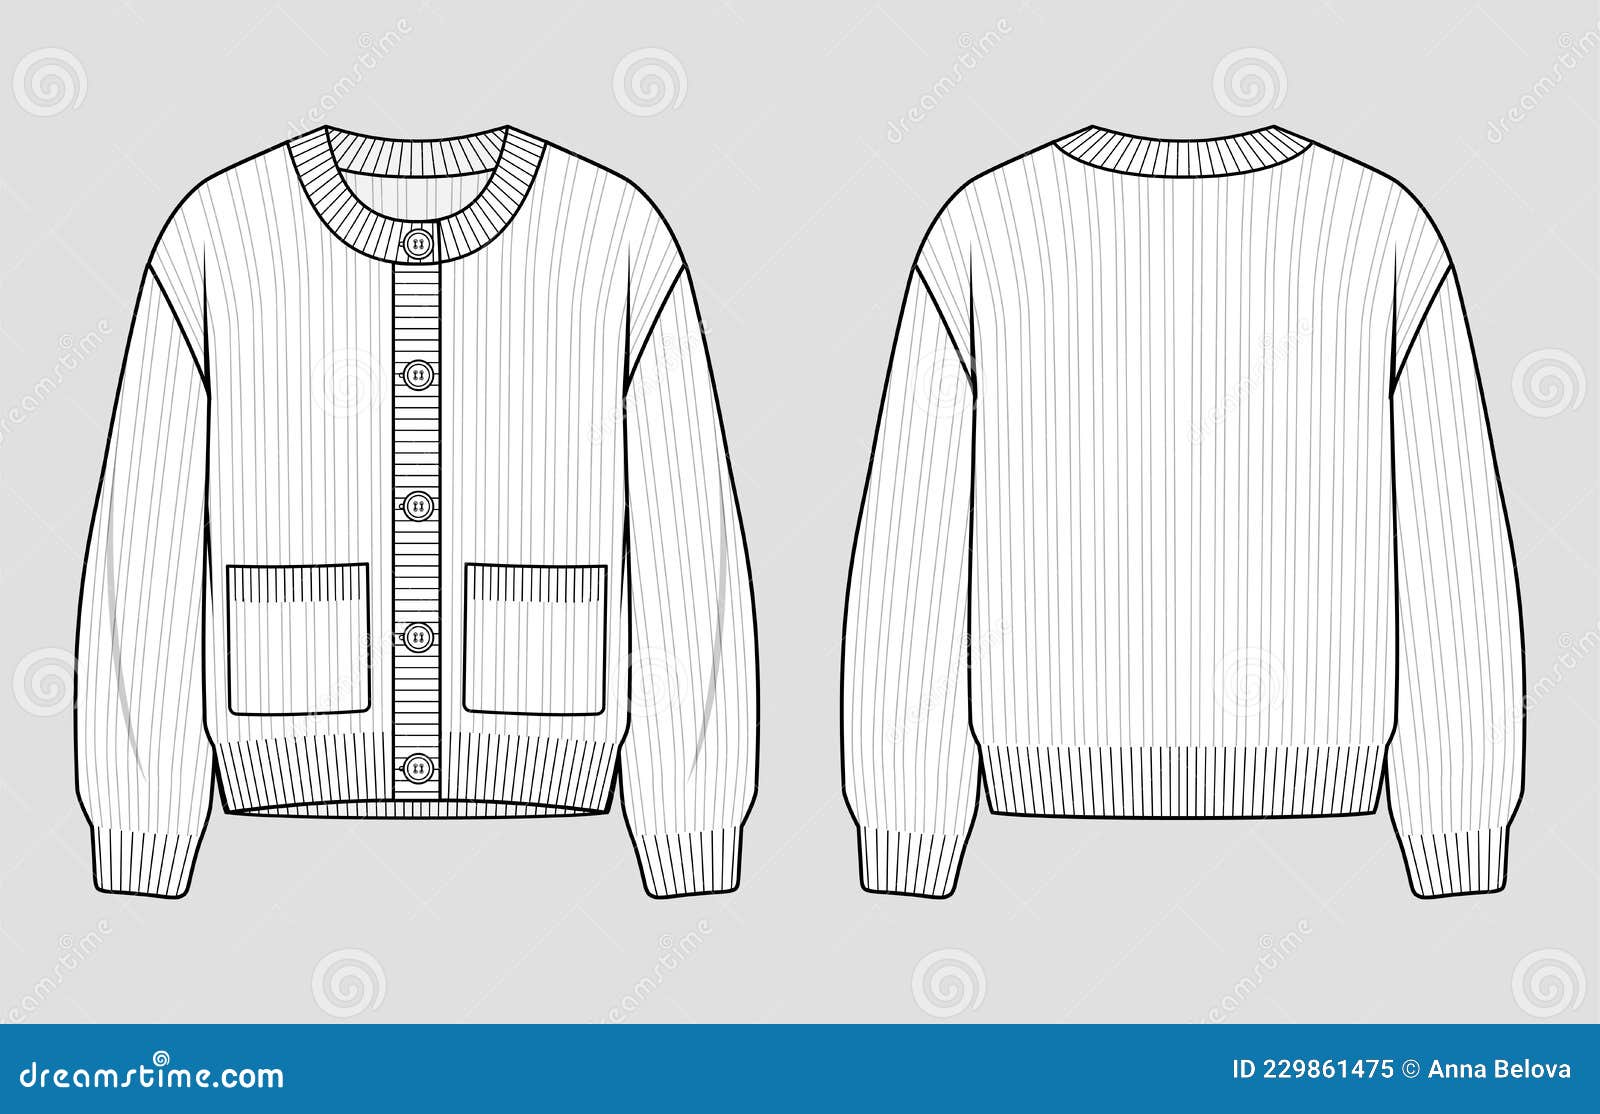 Knit round neck cardigan stock vector. Illustration of knitwear - 229861475